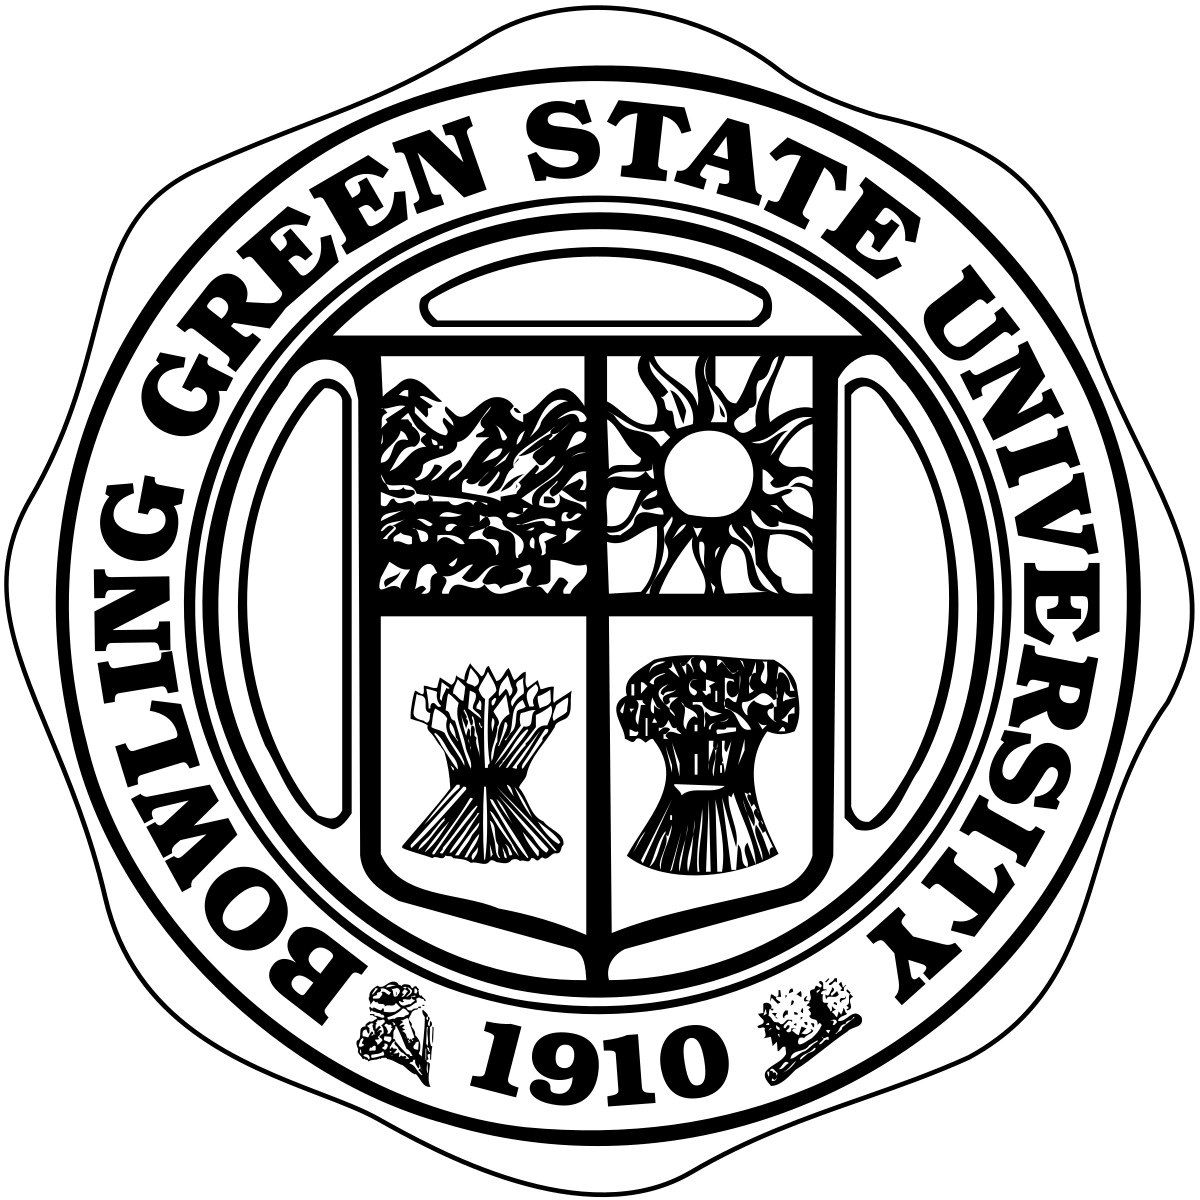 Bowling Green State University Logo - Bowling Green State University